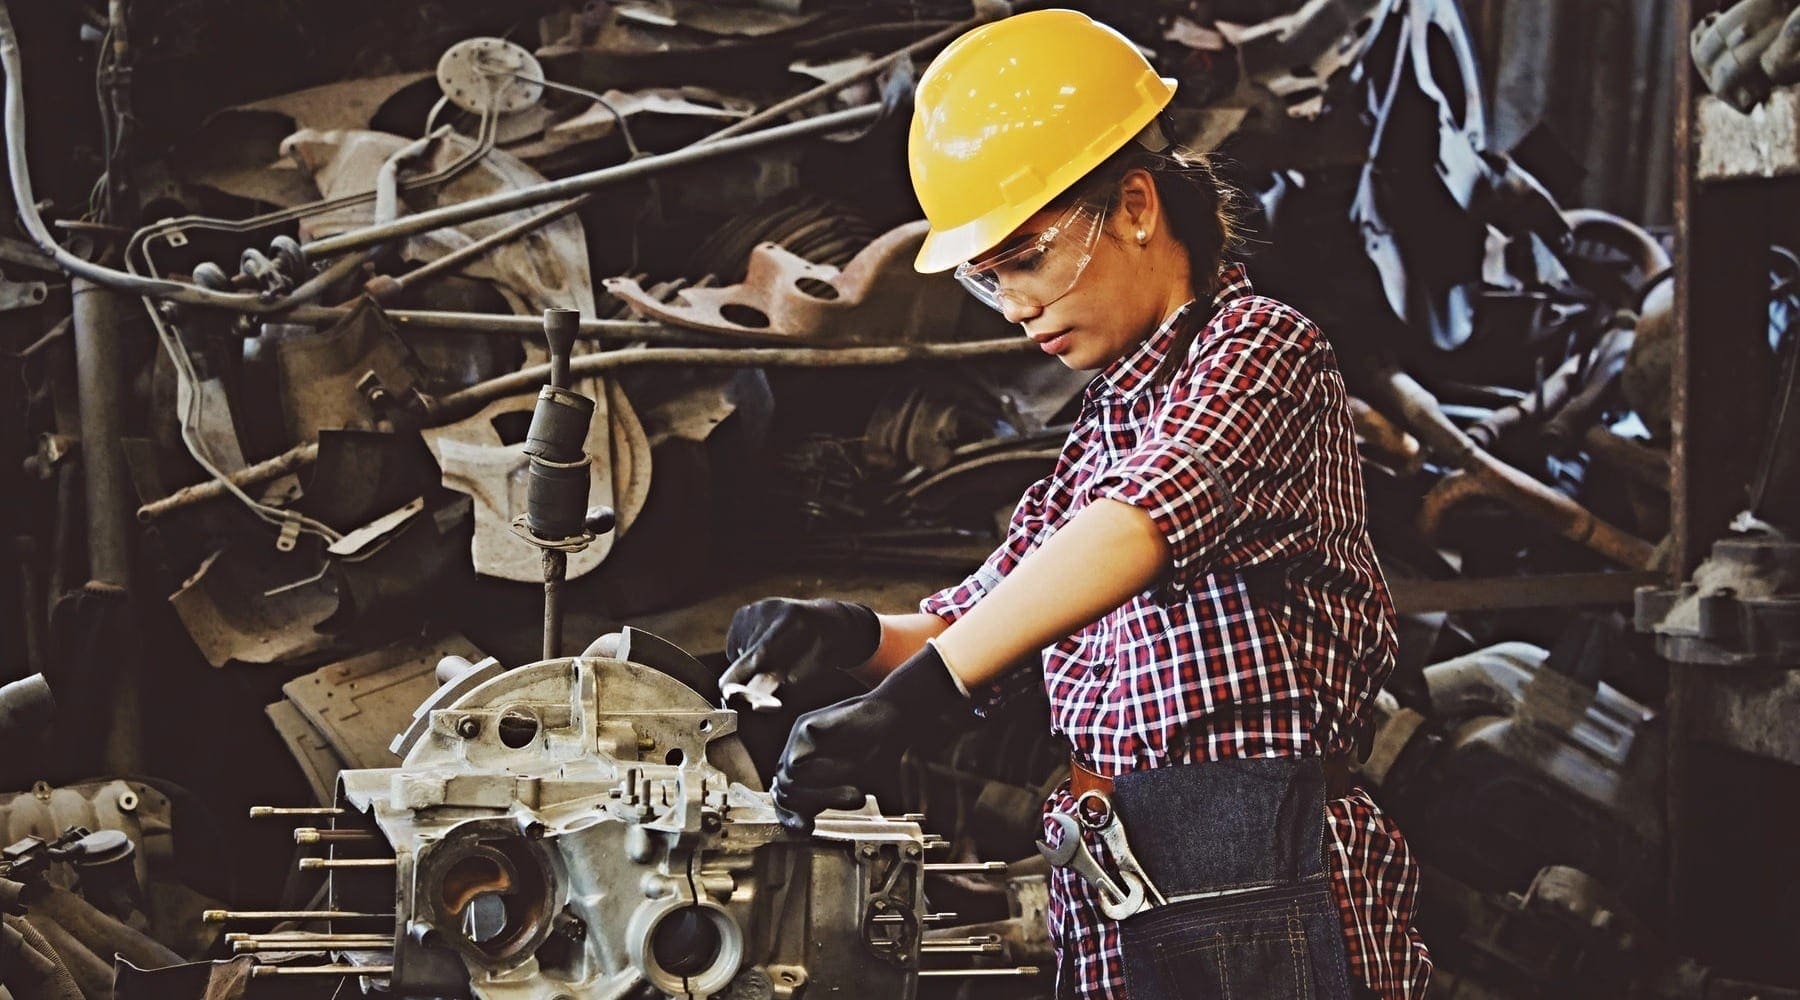 Women’s Rights, Opportunities in Global Workforce Lag Behind Men